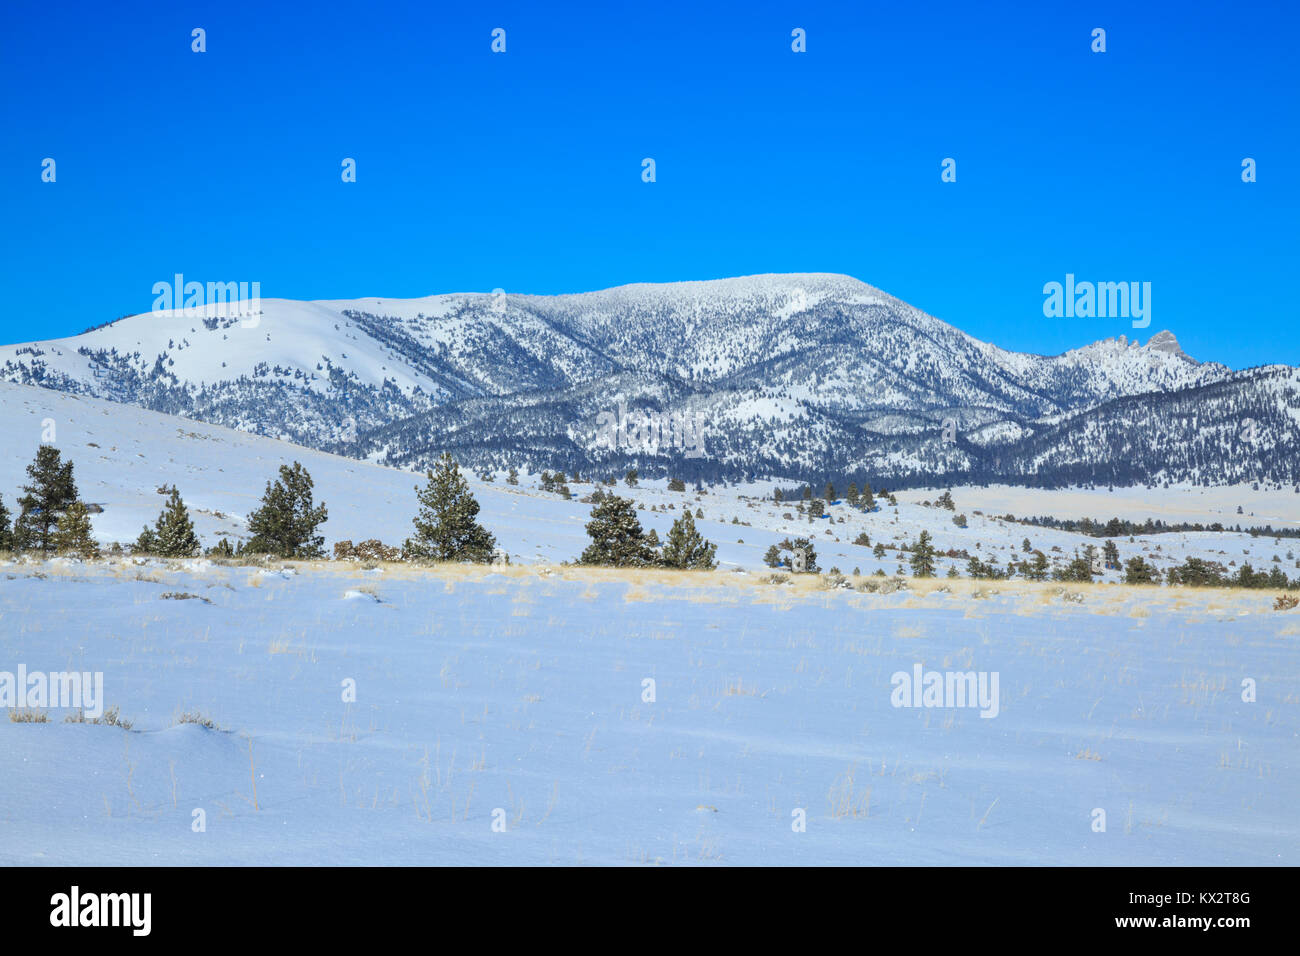 sleeping giant mountain in winter near helena, montana Stock Photo